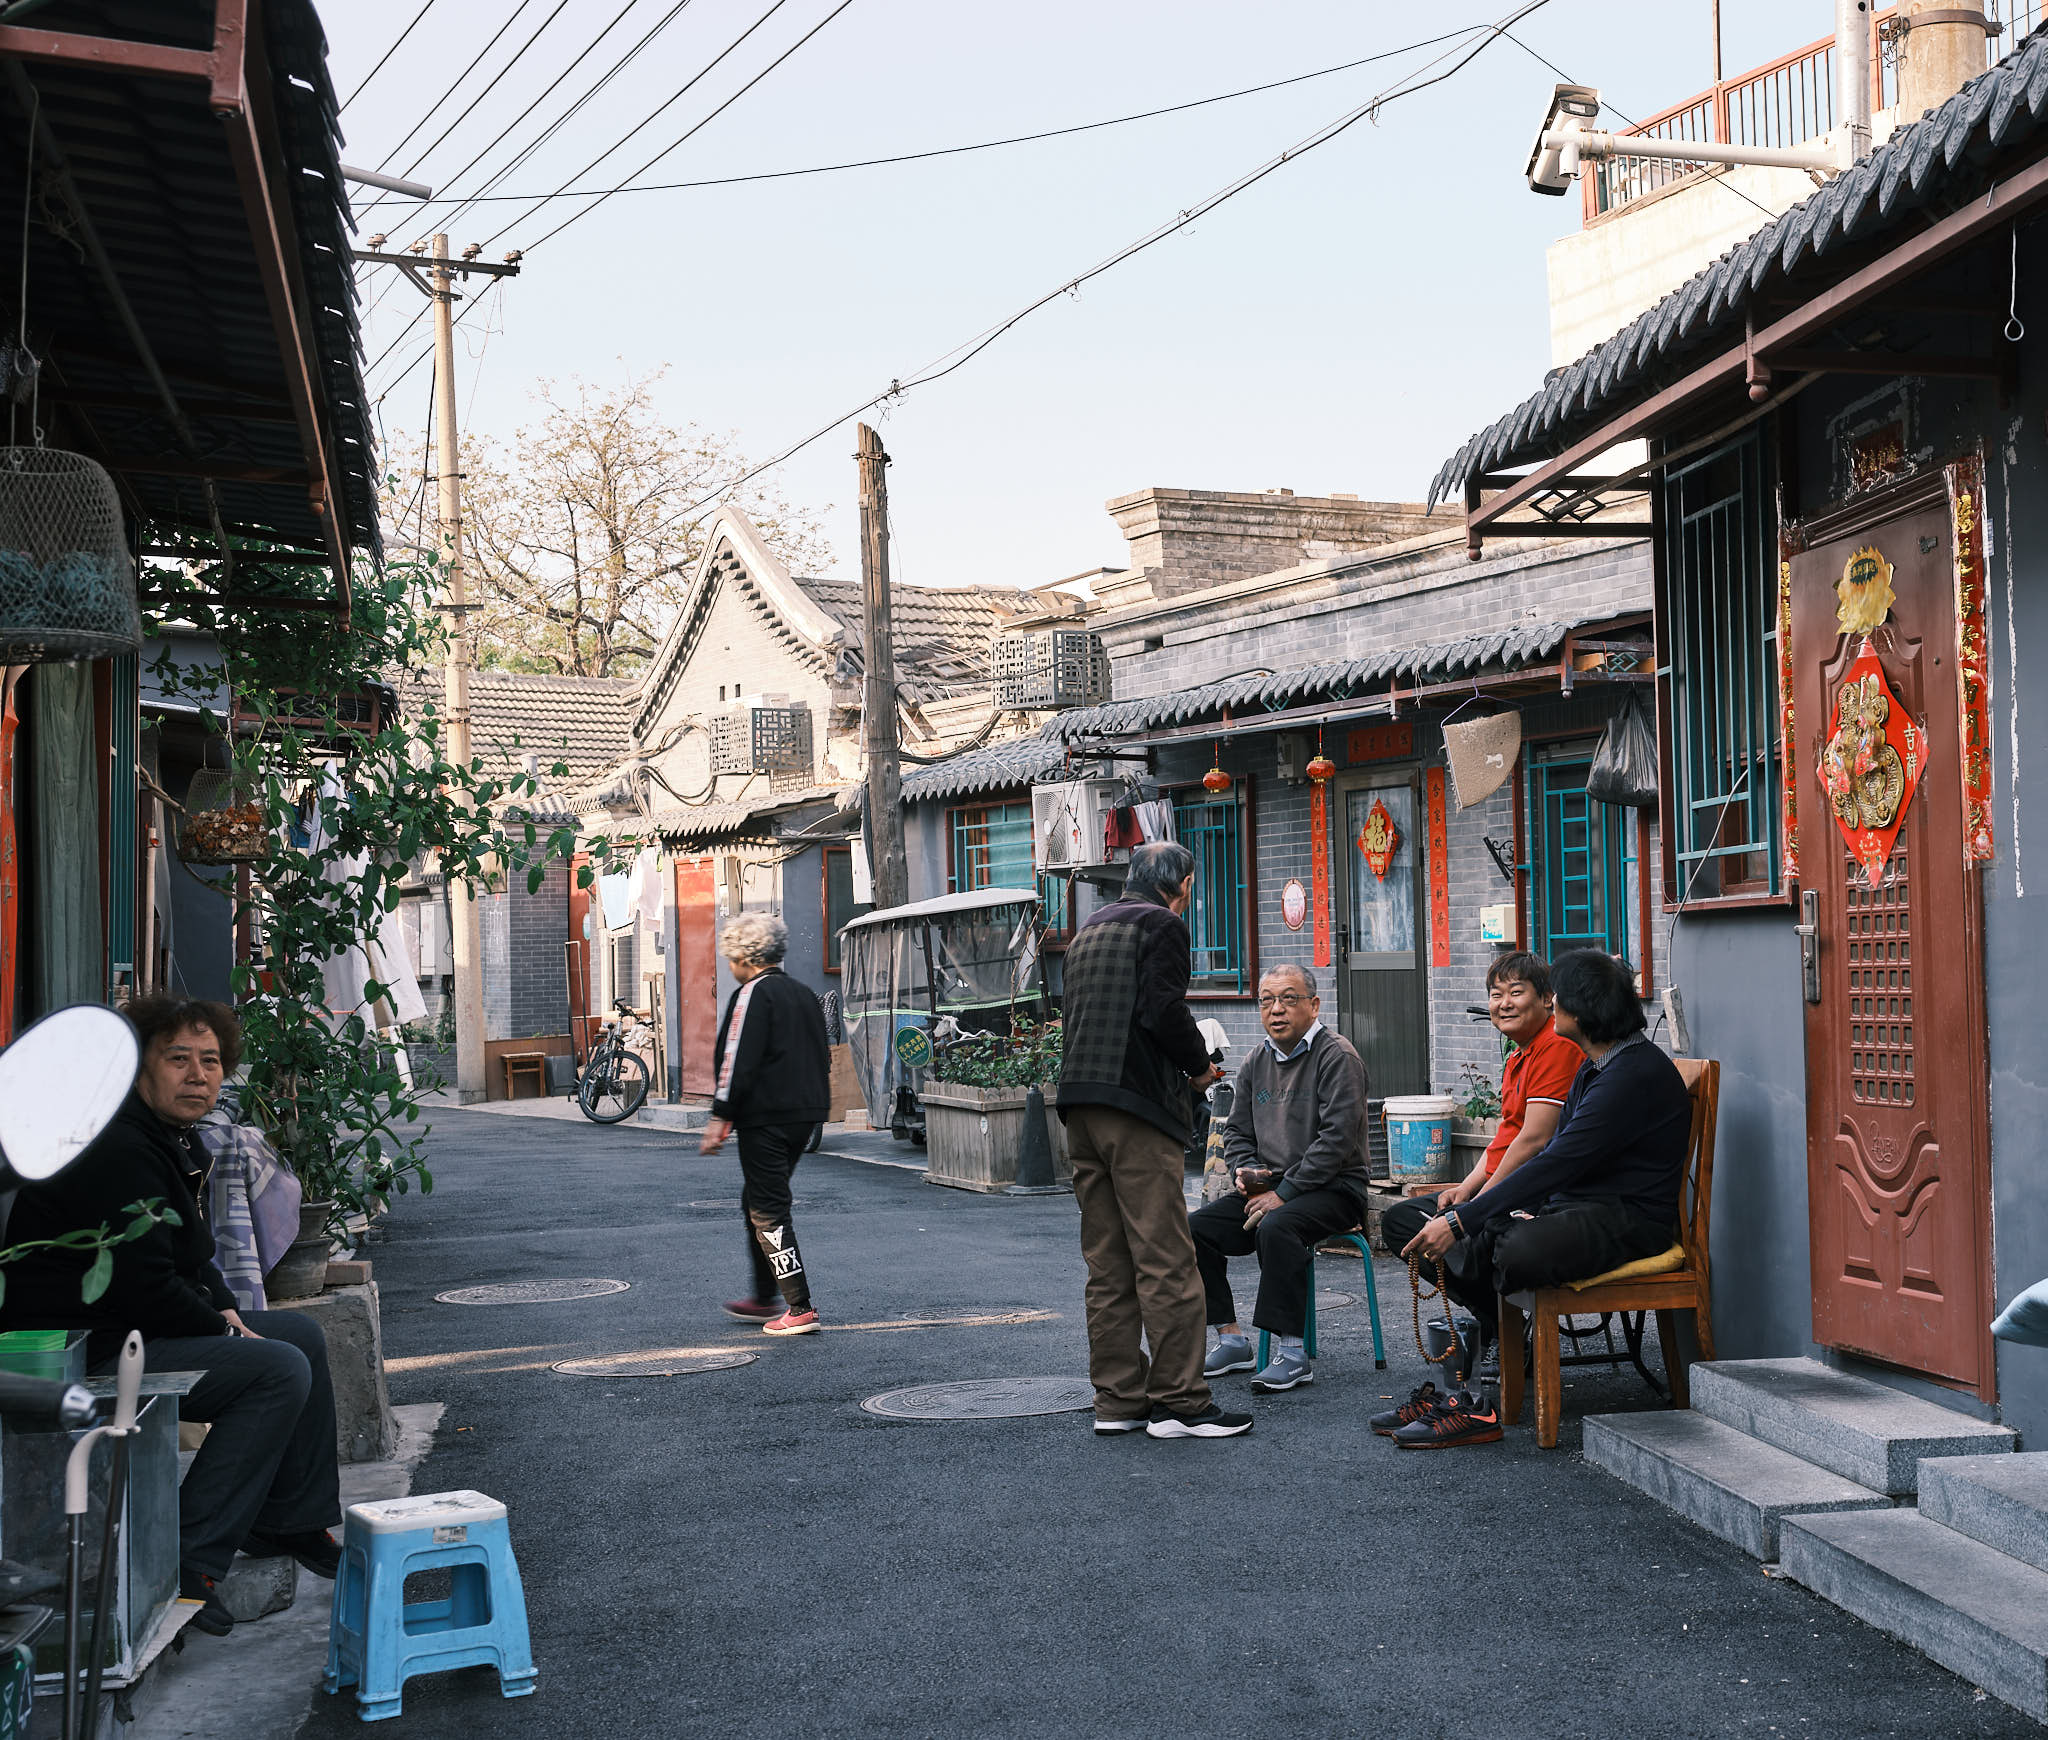 Residents hanging around in Qianmen Hutong Beijing